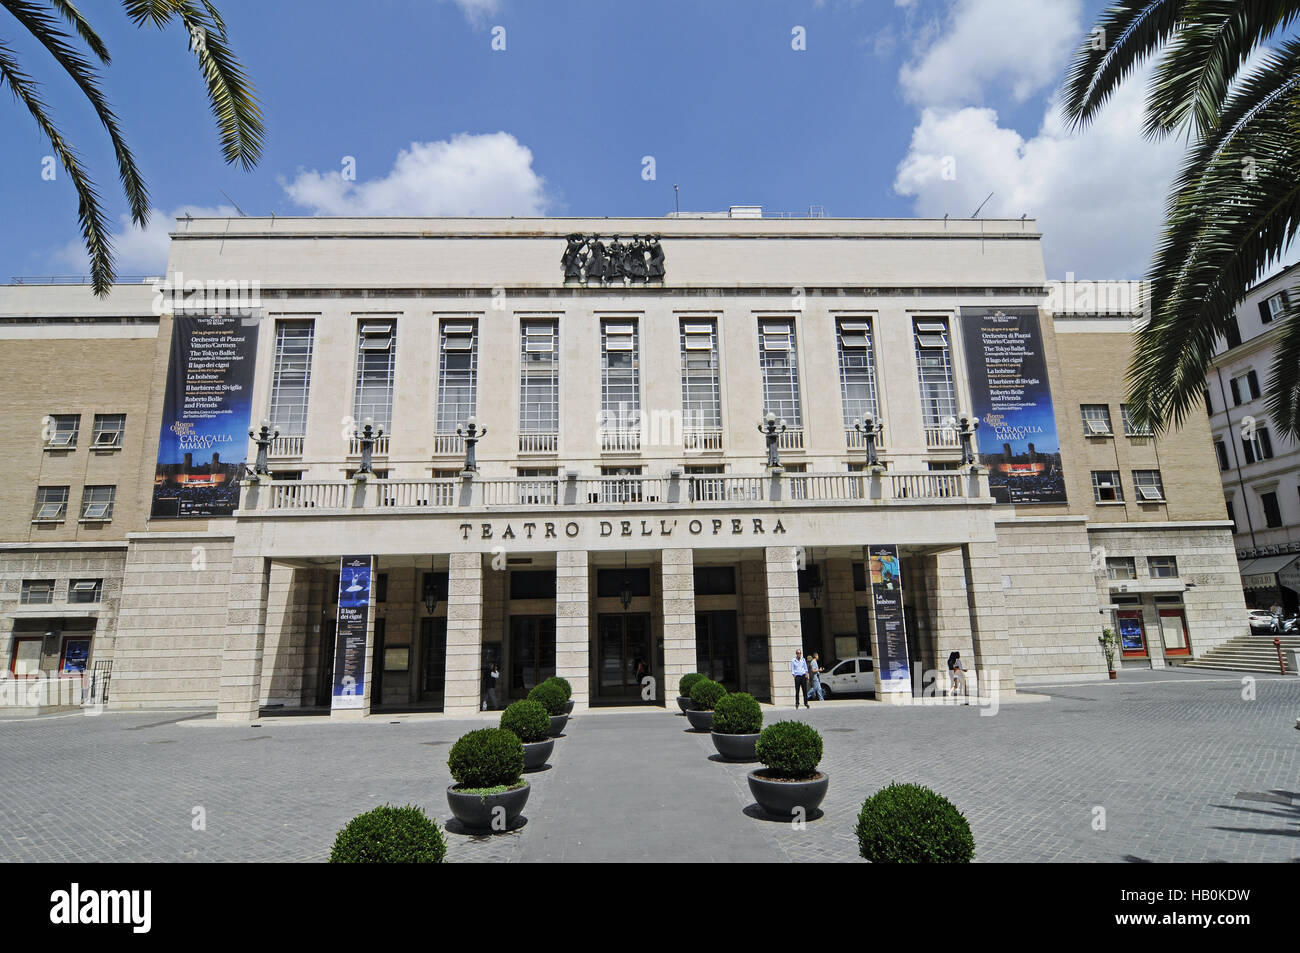 Teatro dell Opera, opera house, Rome, Italy Stock Photo - Alamy